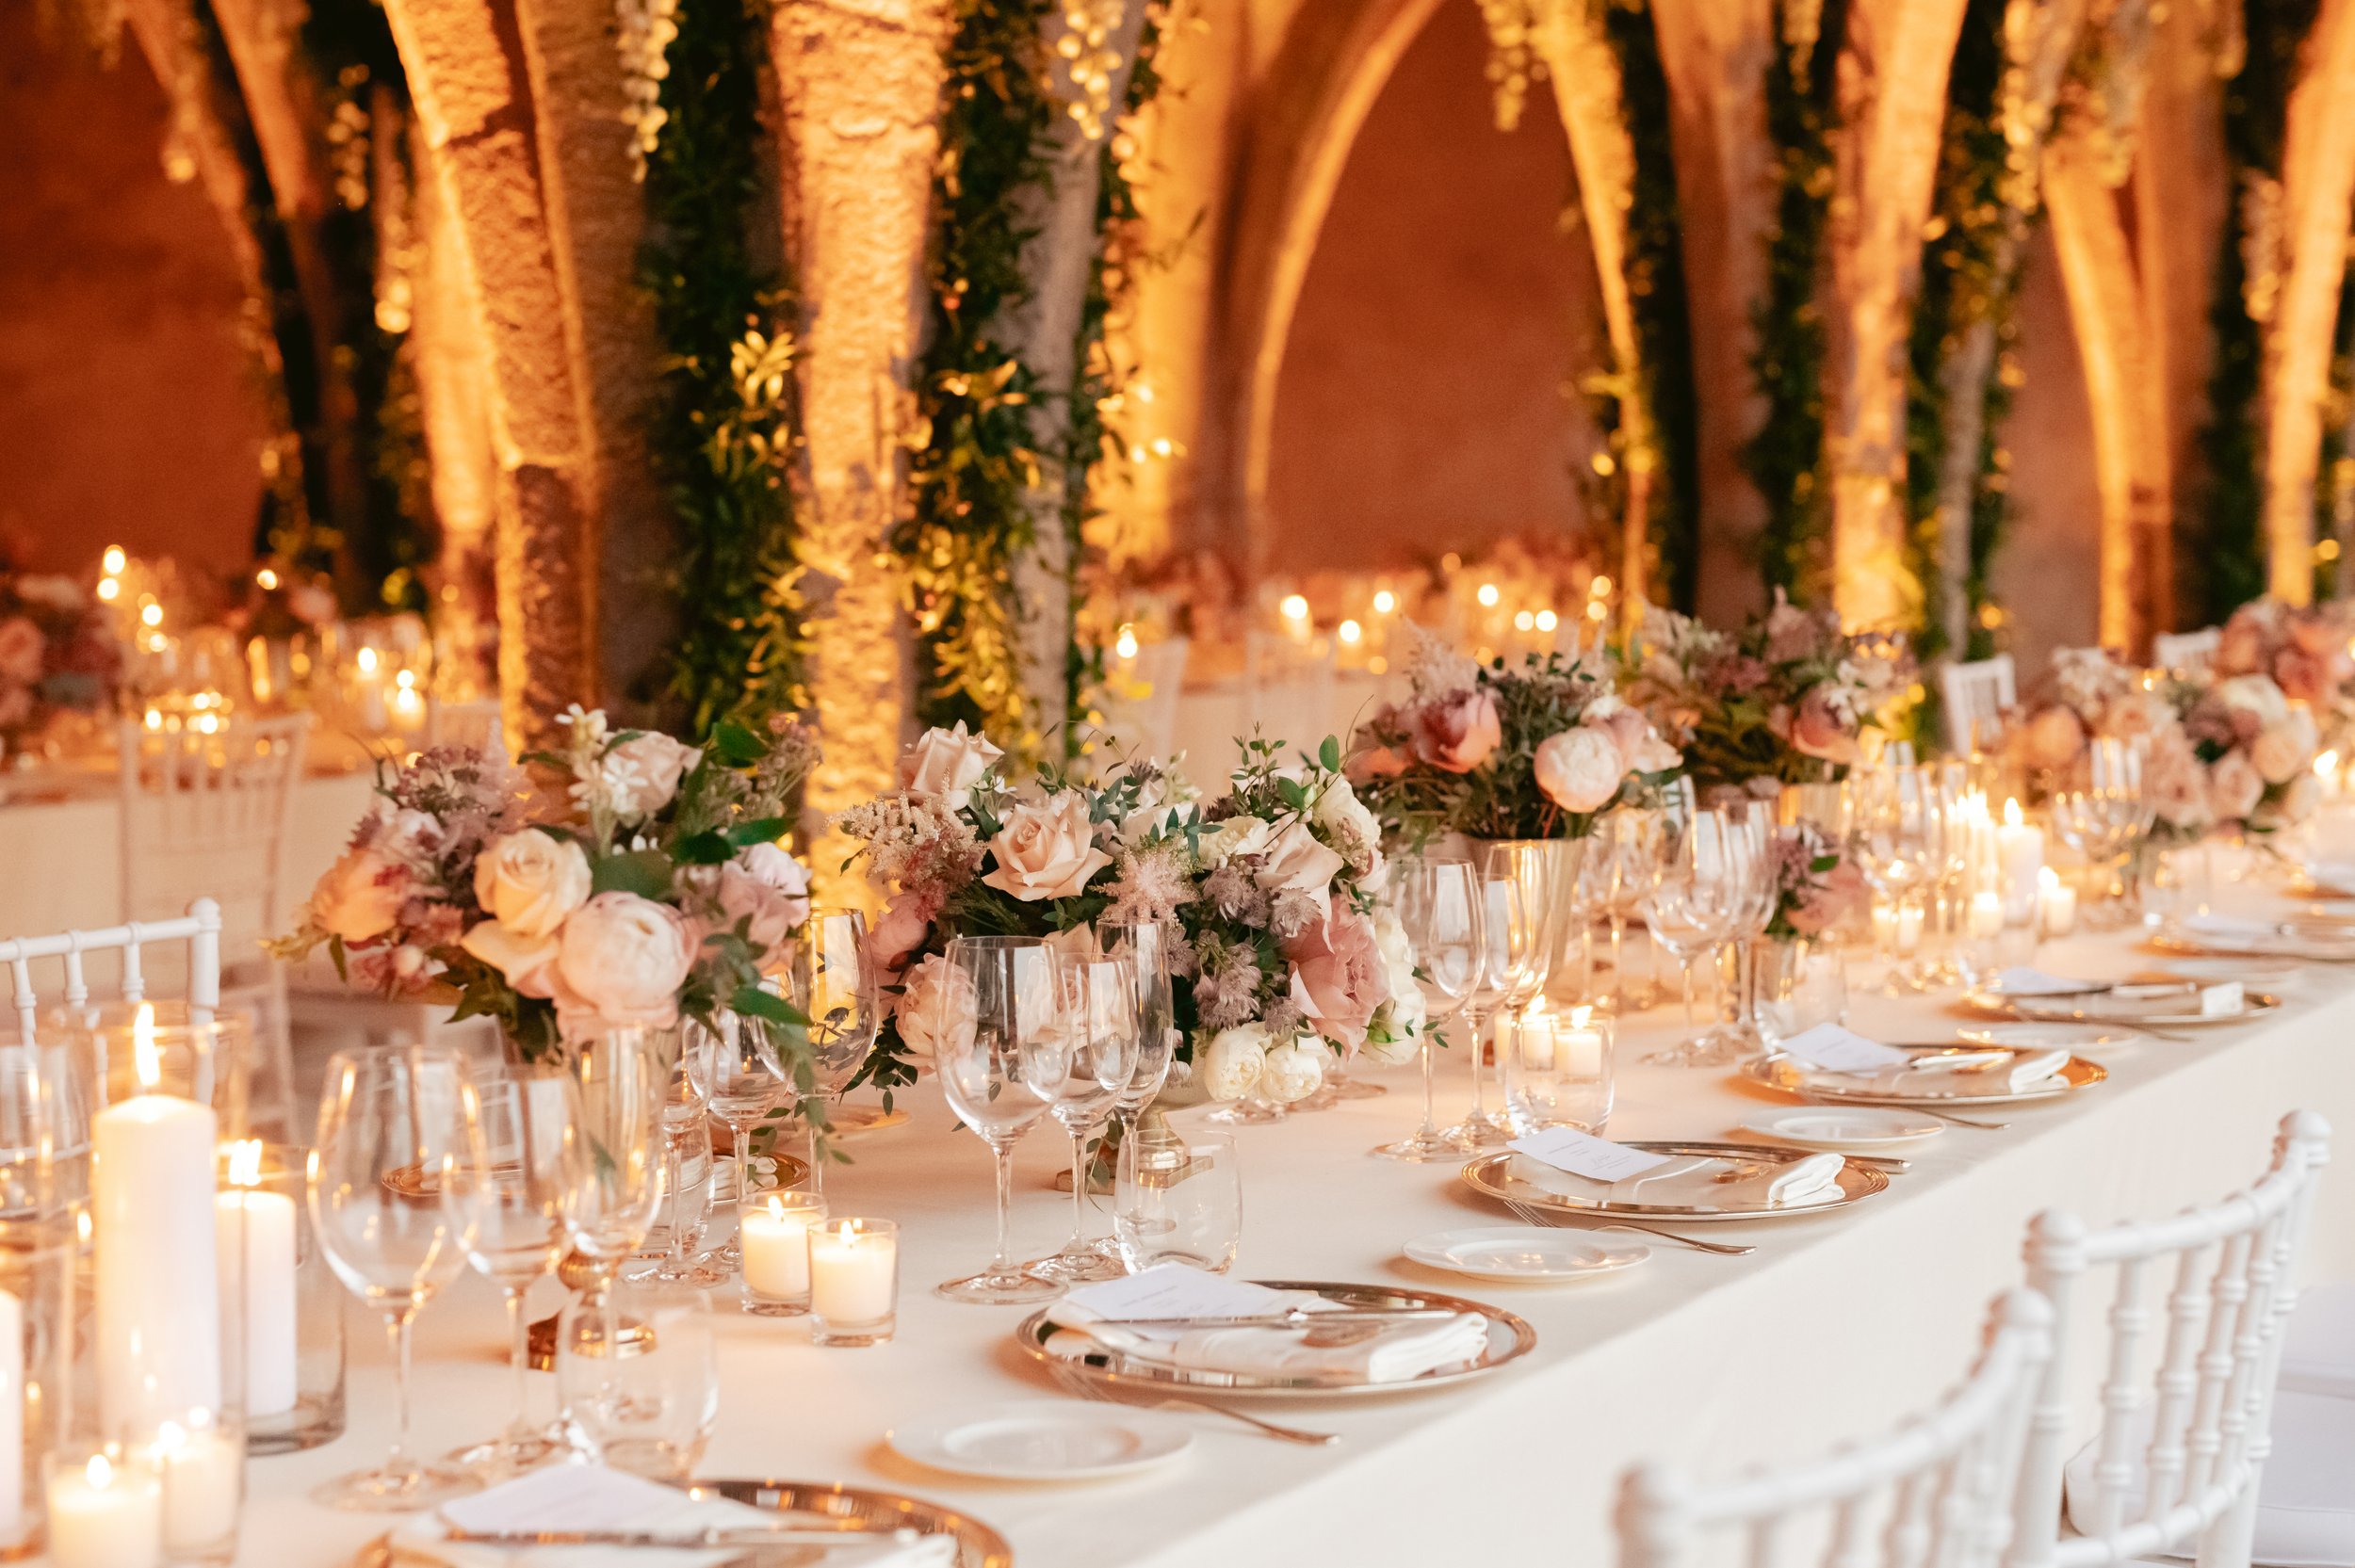 villa-cimbrone-wedding-ravello-italy-events-by-paulina-corvi-planner.jpg